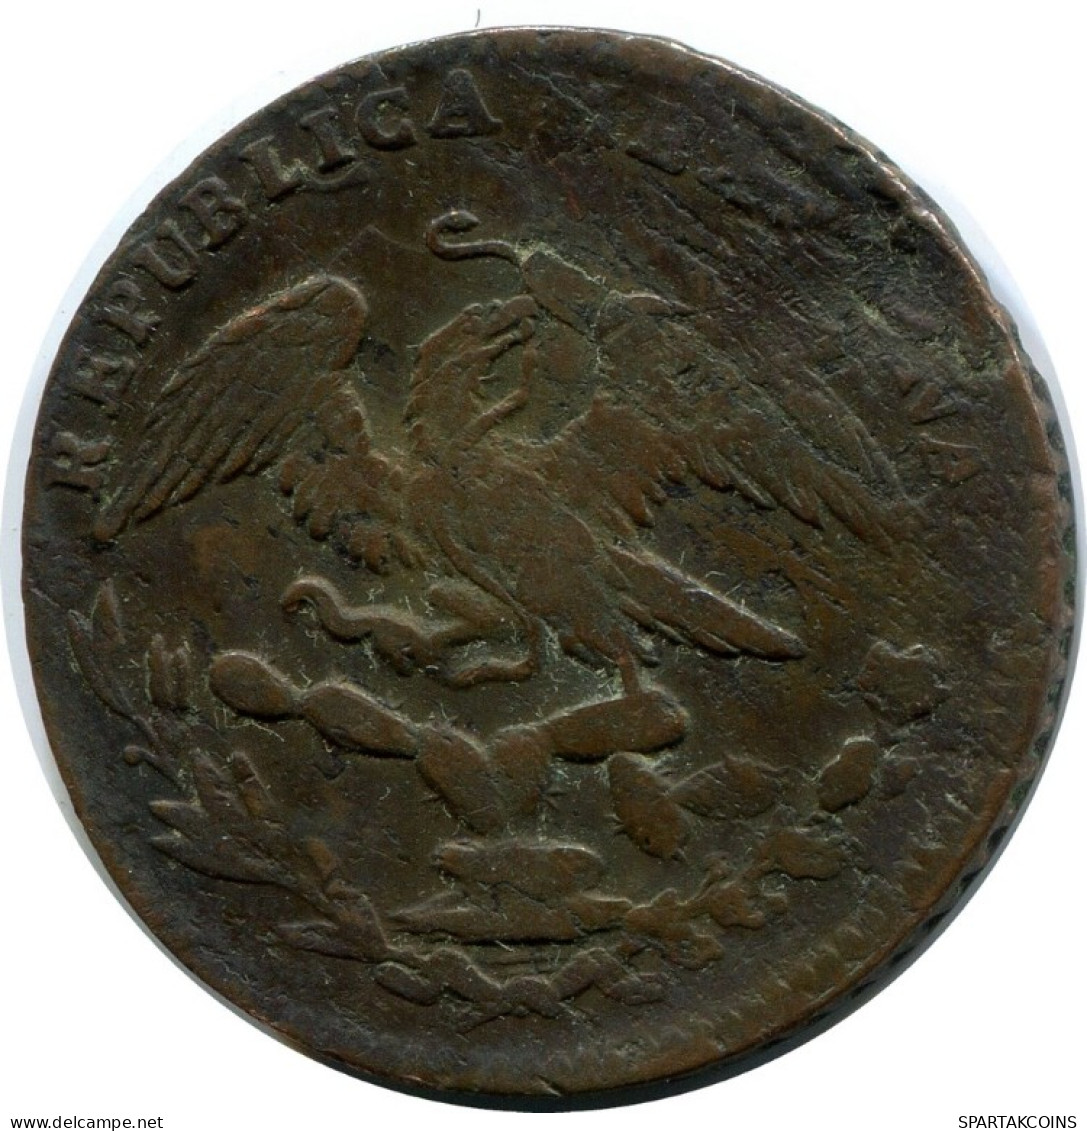 1/4 REAL 1835 MA "Quarto/Quartilla" MEXICO Coin #AH387.5.U.A - Mexico